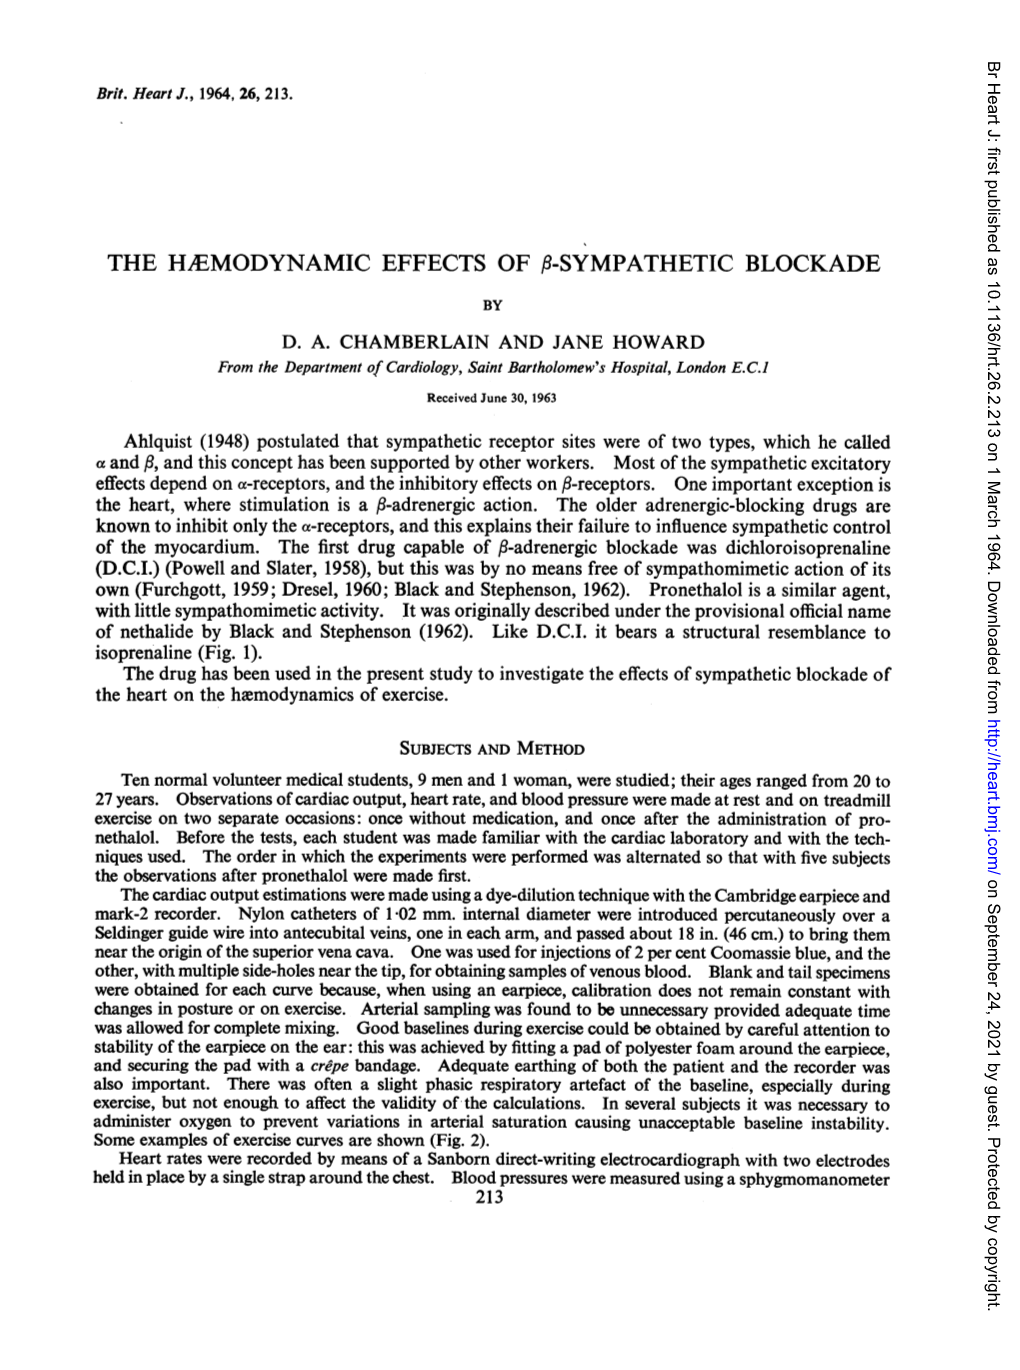 The Haemodynamic Effects of P-Sympathetic Blockade